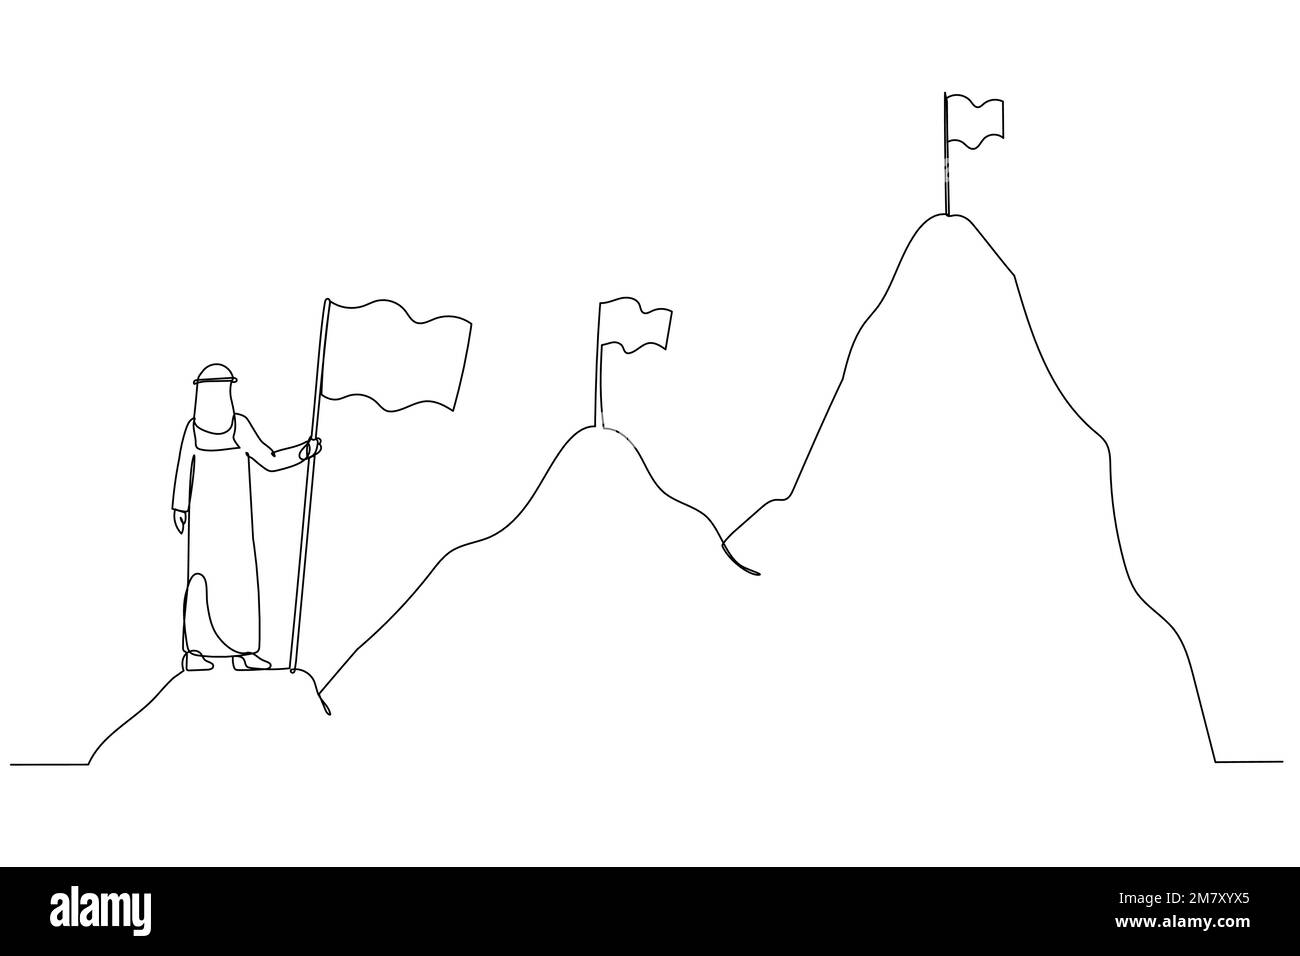 Cartoon of arab businessman climbing up mountains concept of business development. One line art style design Stock Vector